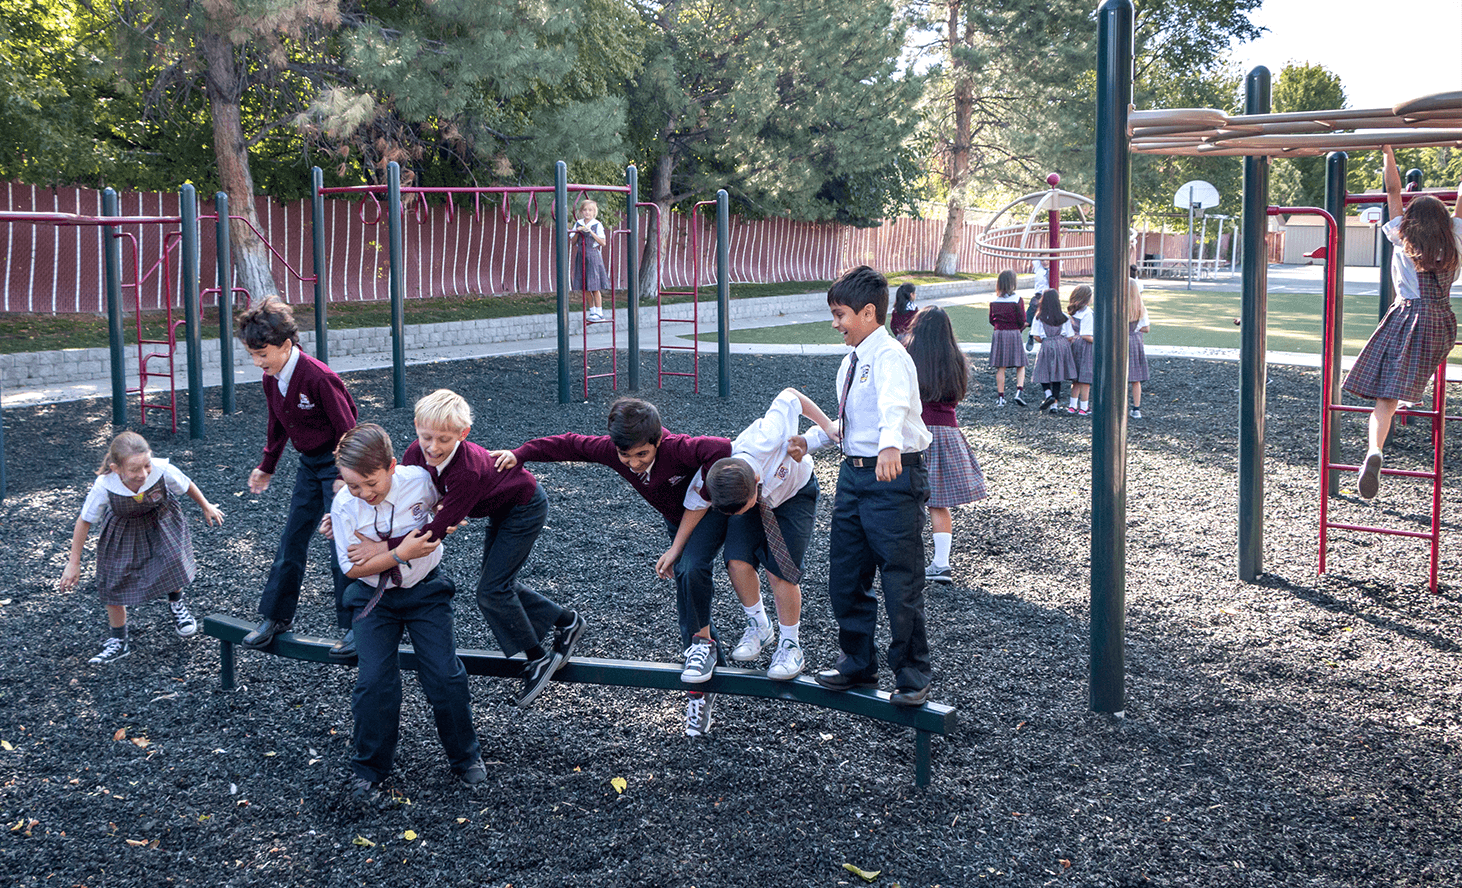 Playground Balance Beam | Challenger School - Sandy | Private School In Sandy, Utah